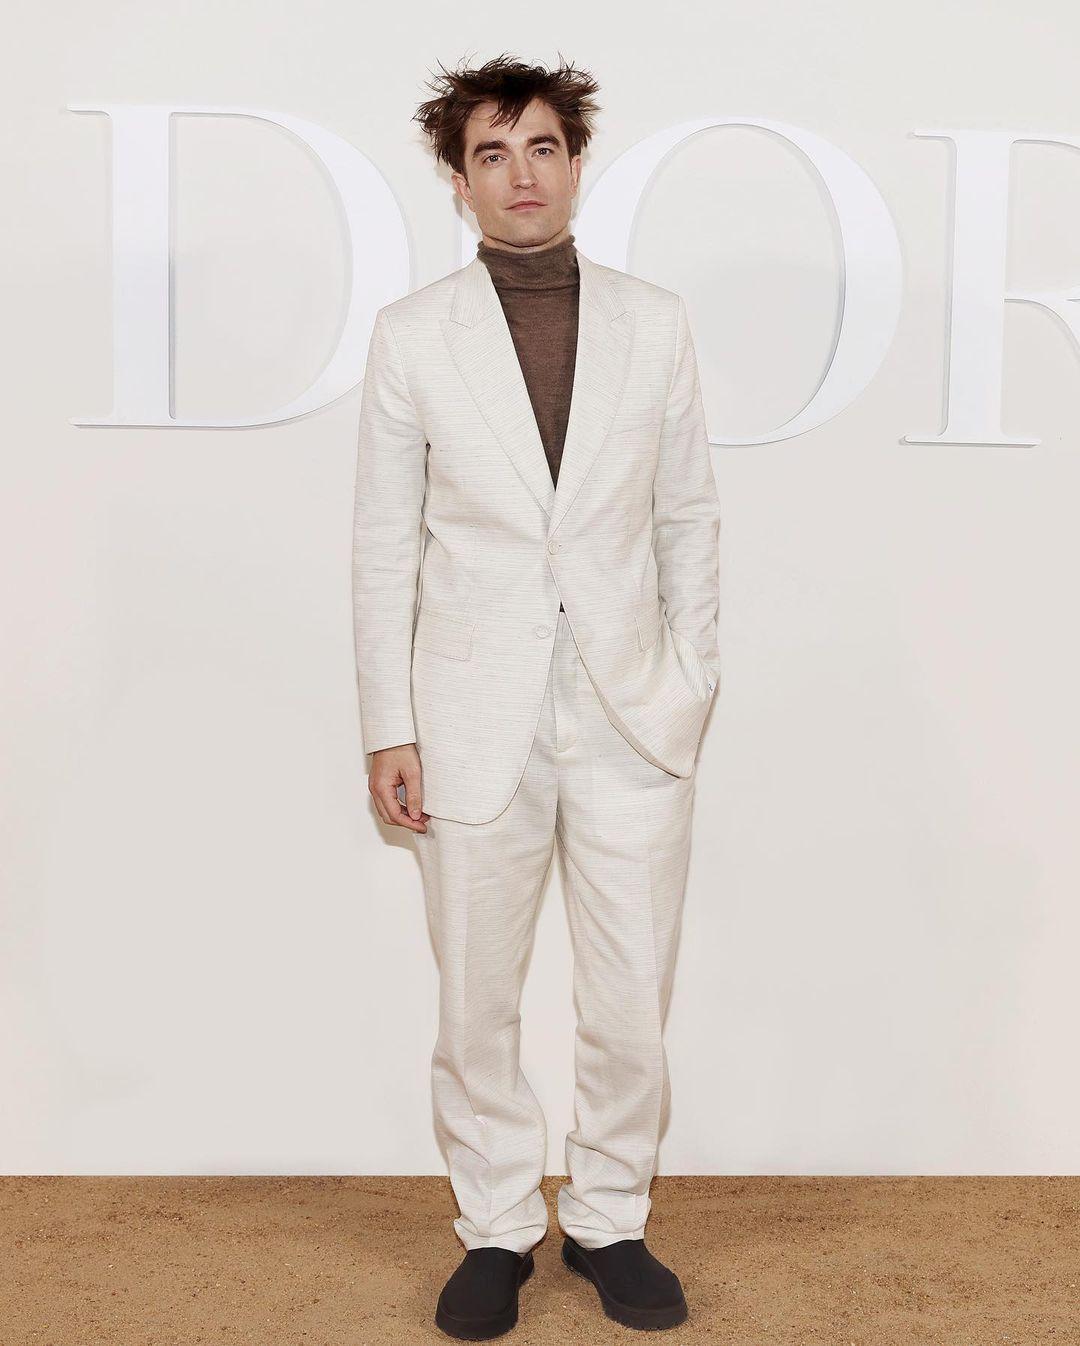 Robert Pattinson at the Dior red carpet